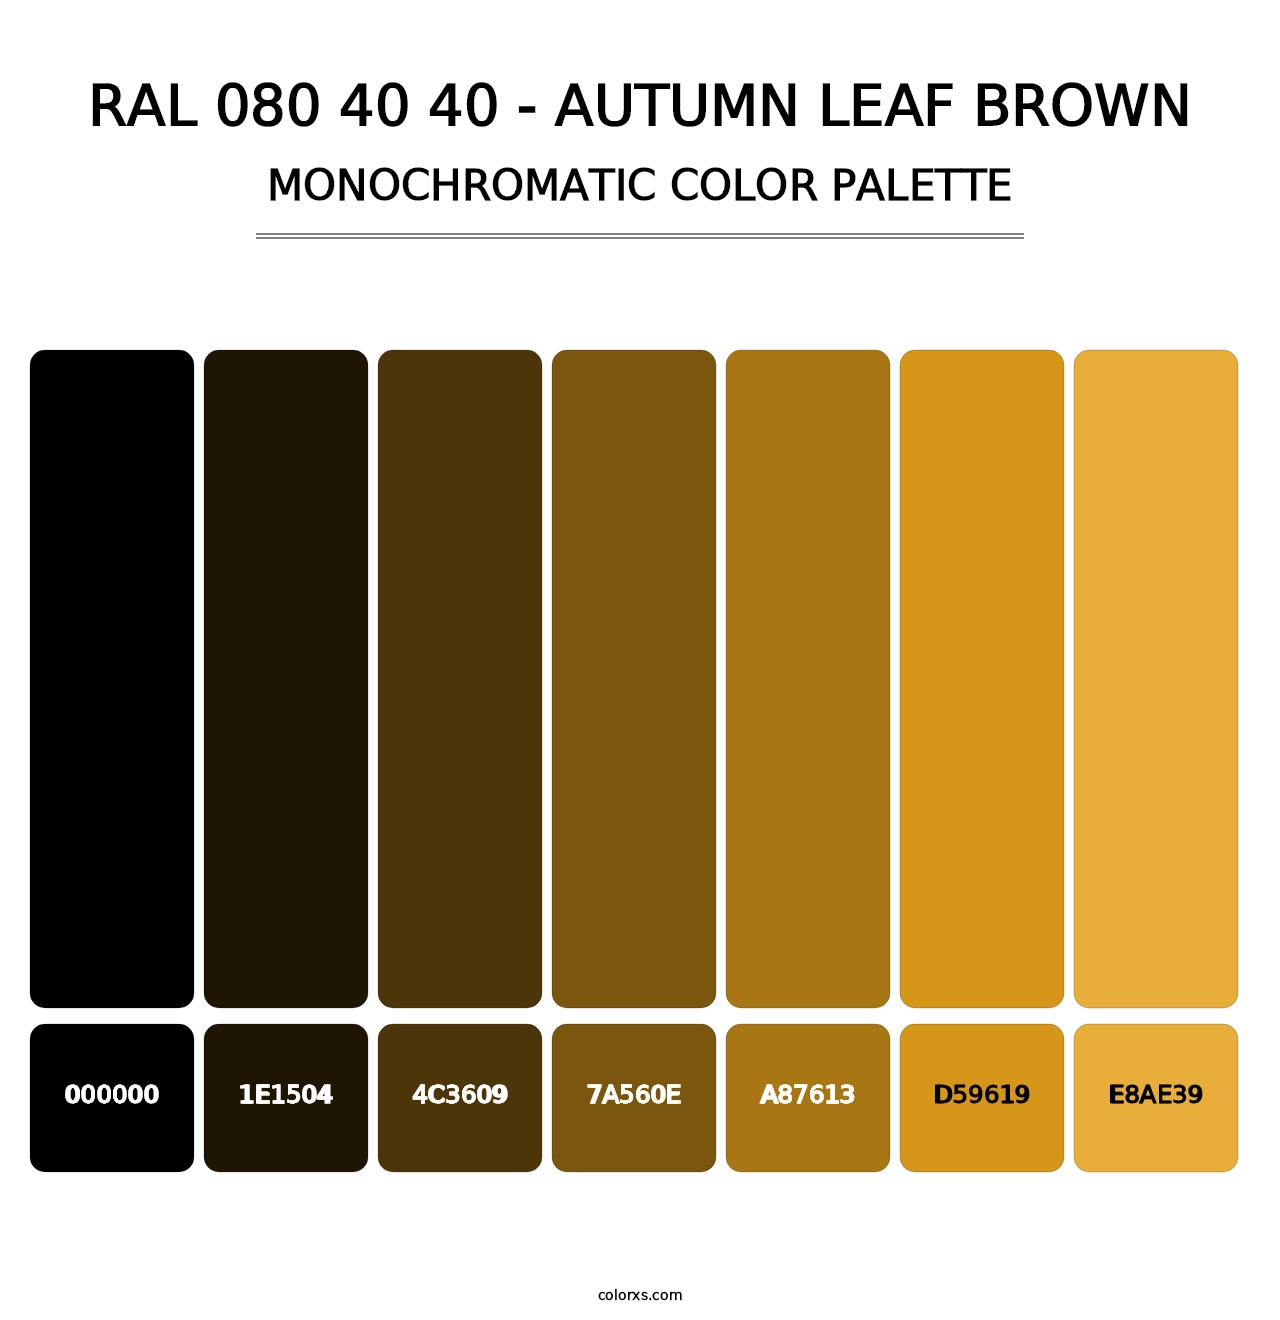 RAL 080 40 40 - Autumn Leaf Brown - Monochromatic Color Palette